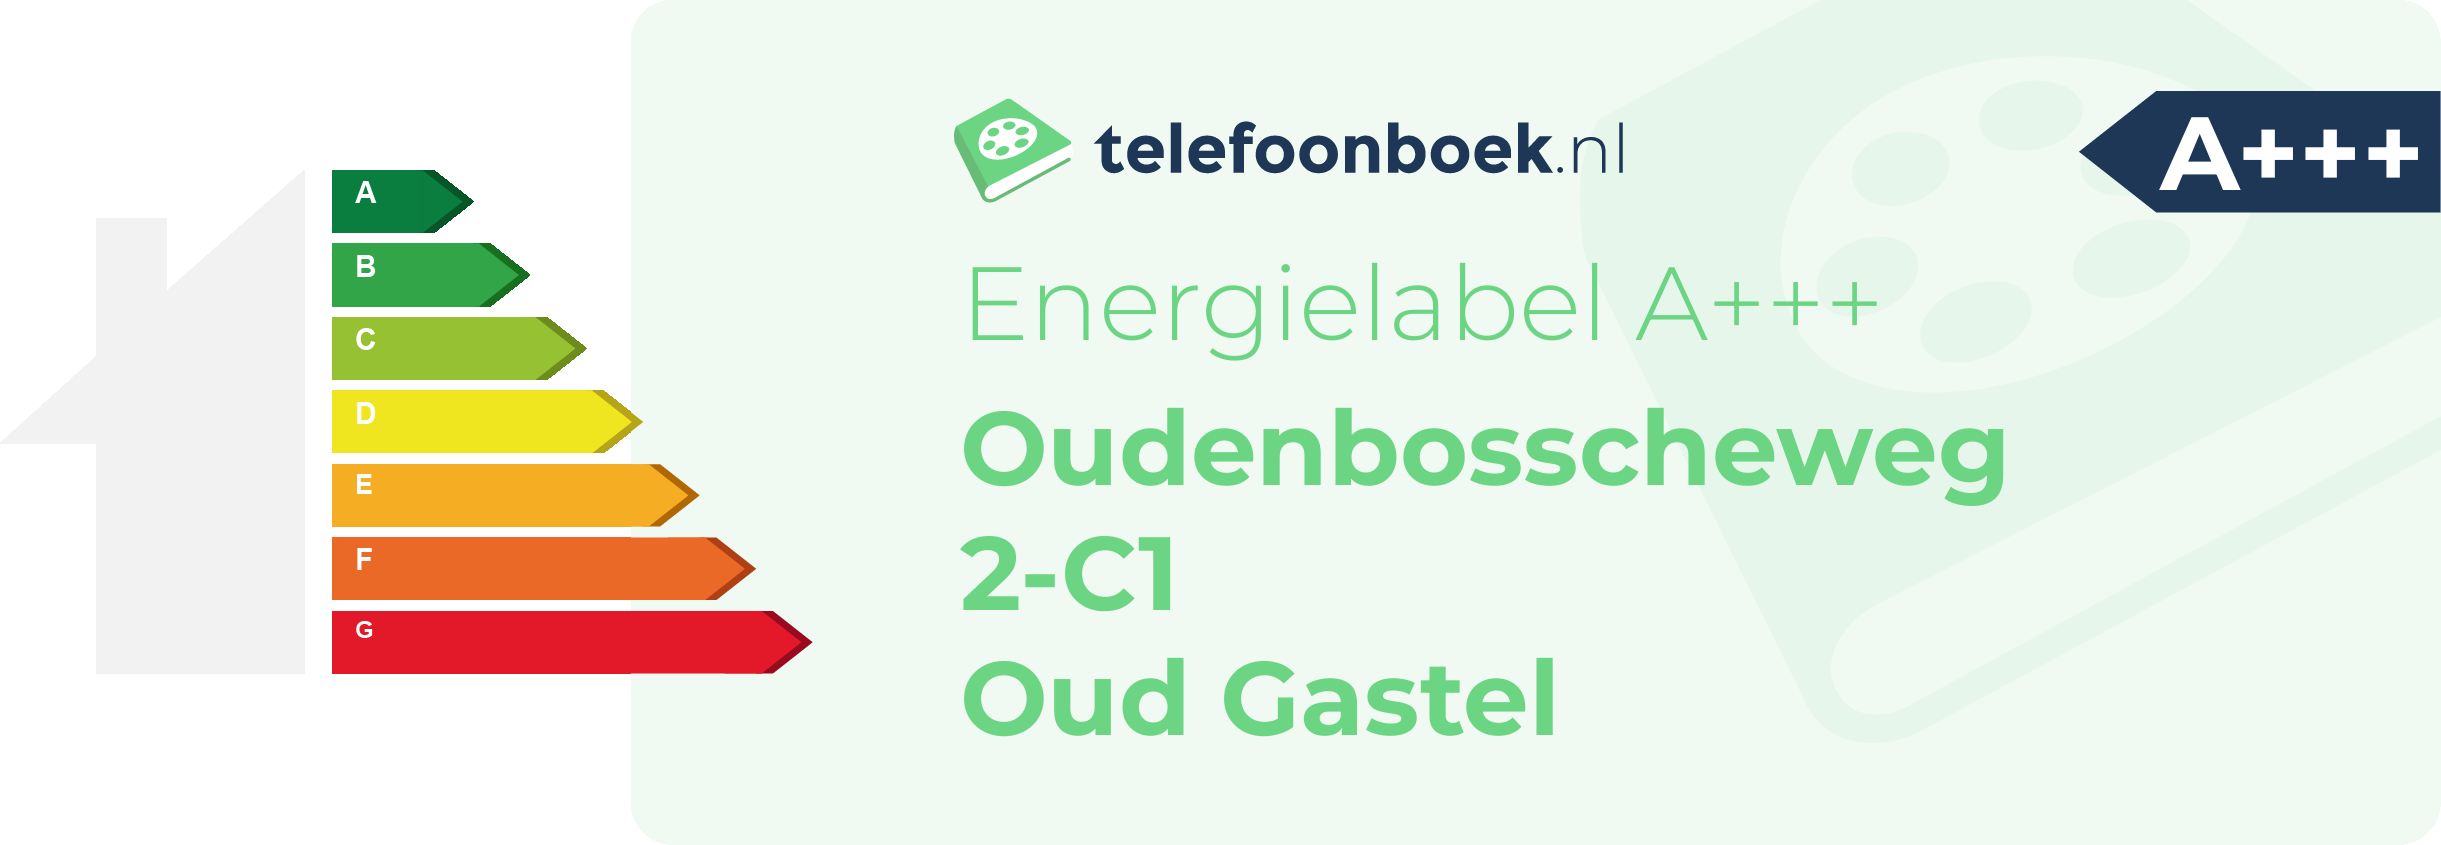 Energielabel Oudenbosscheweg 2-C1 Oud Gastel